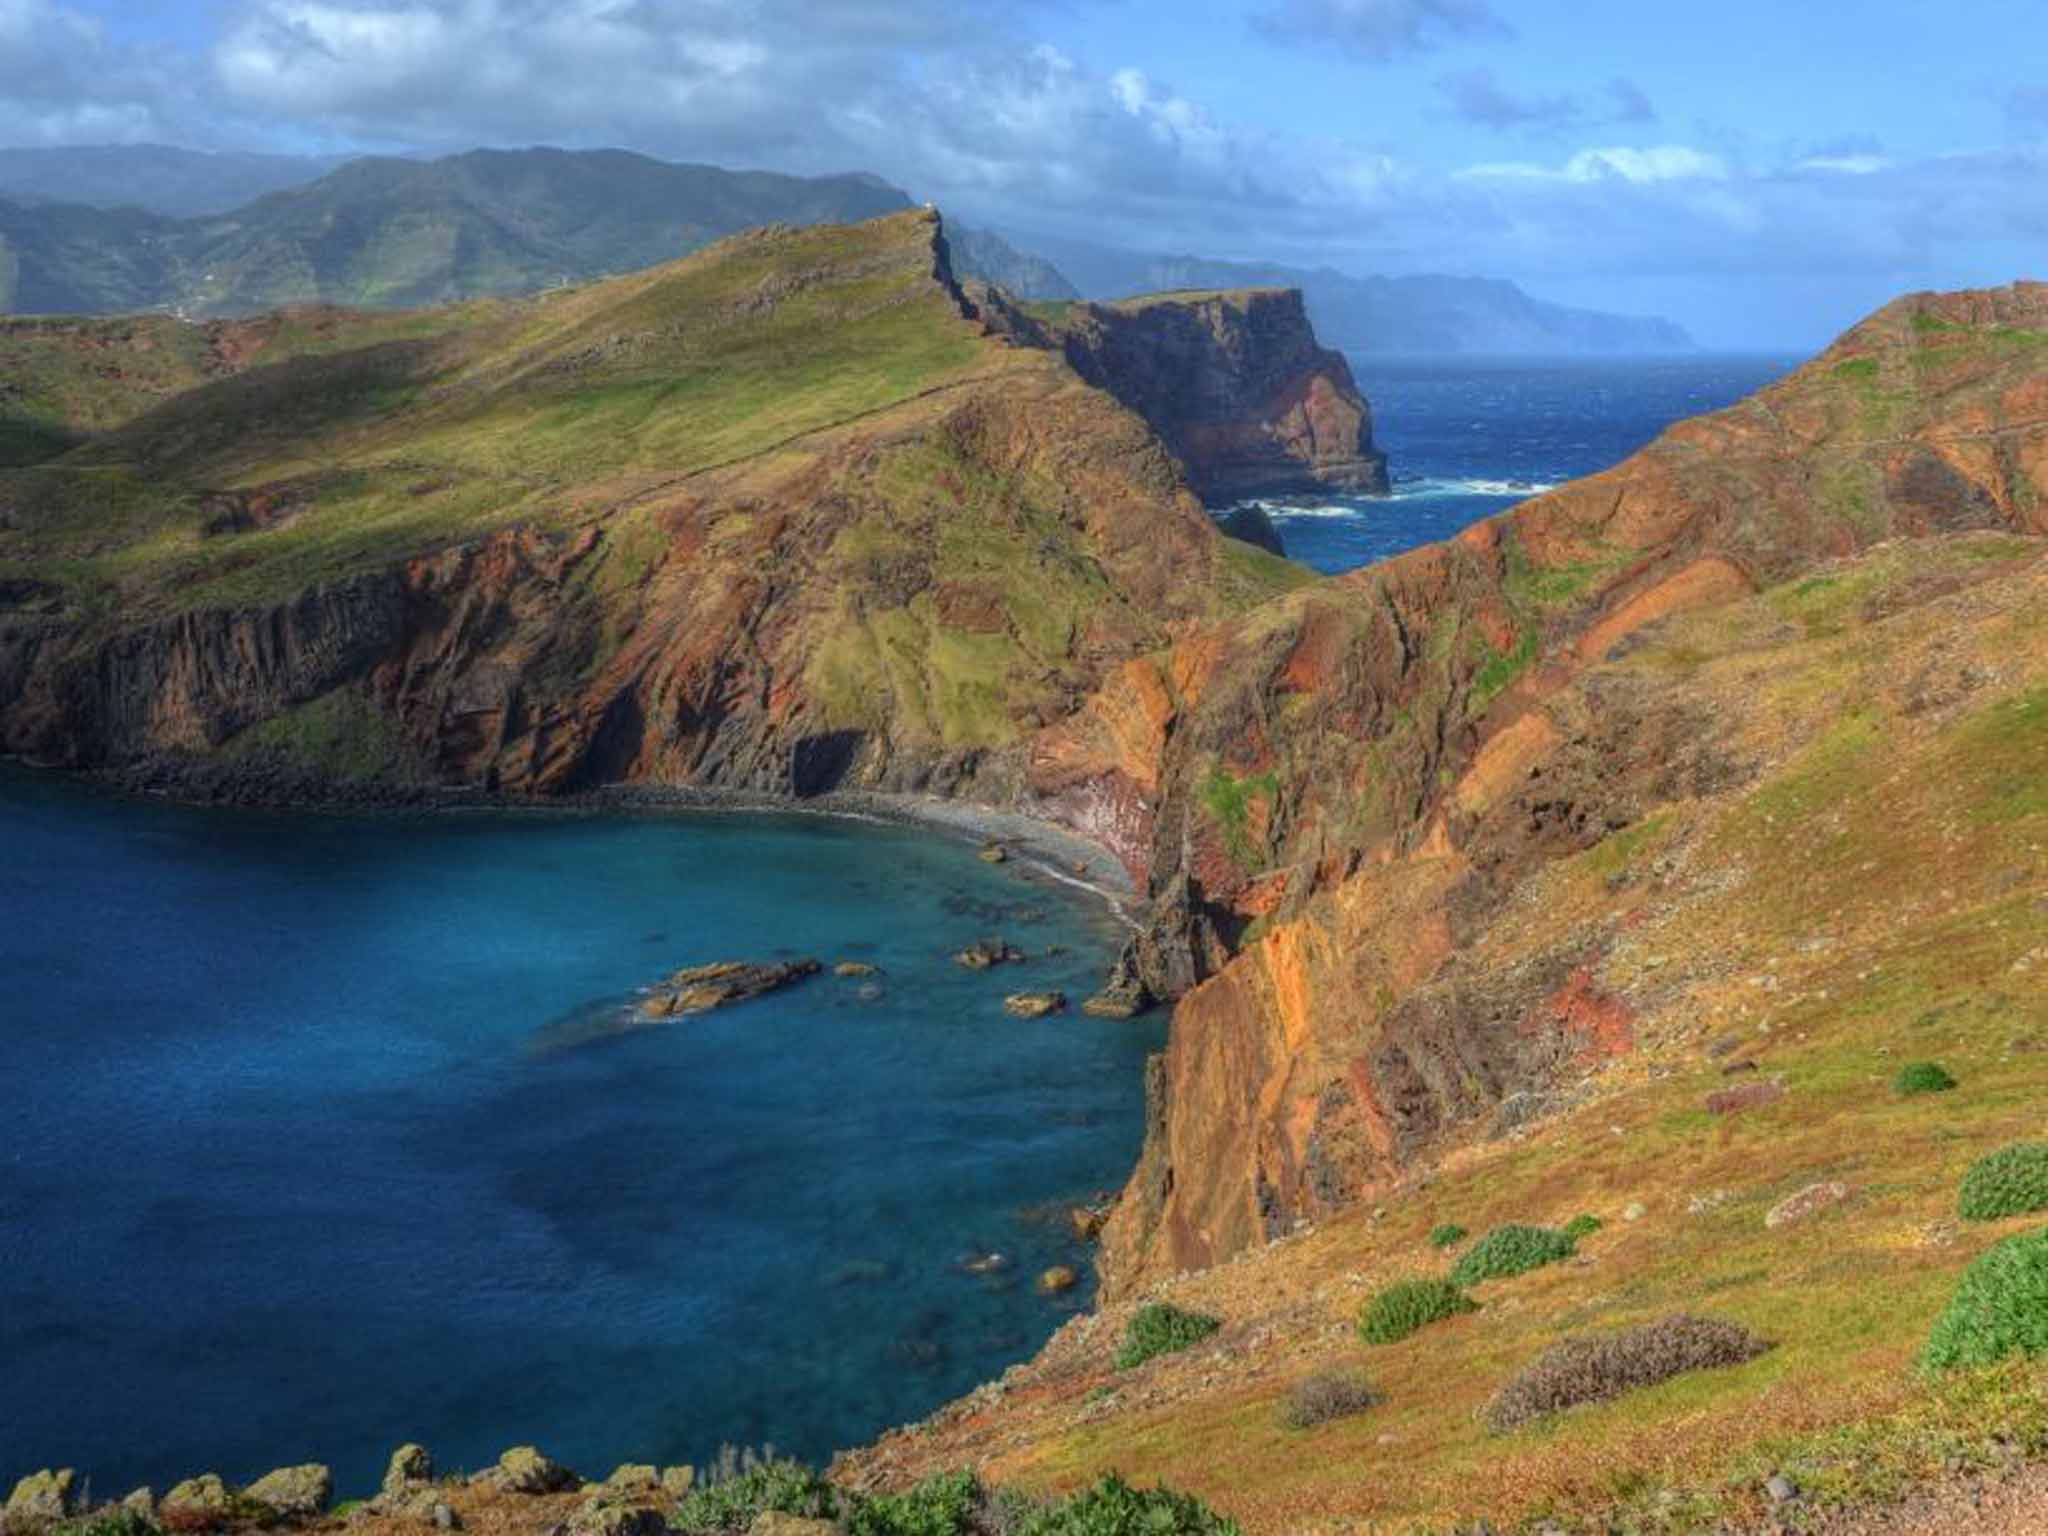 Treasure island: Helen was surprised by Madeira